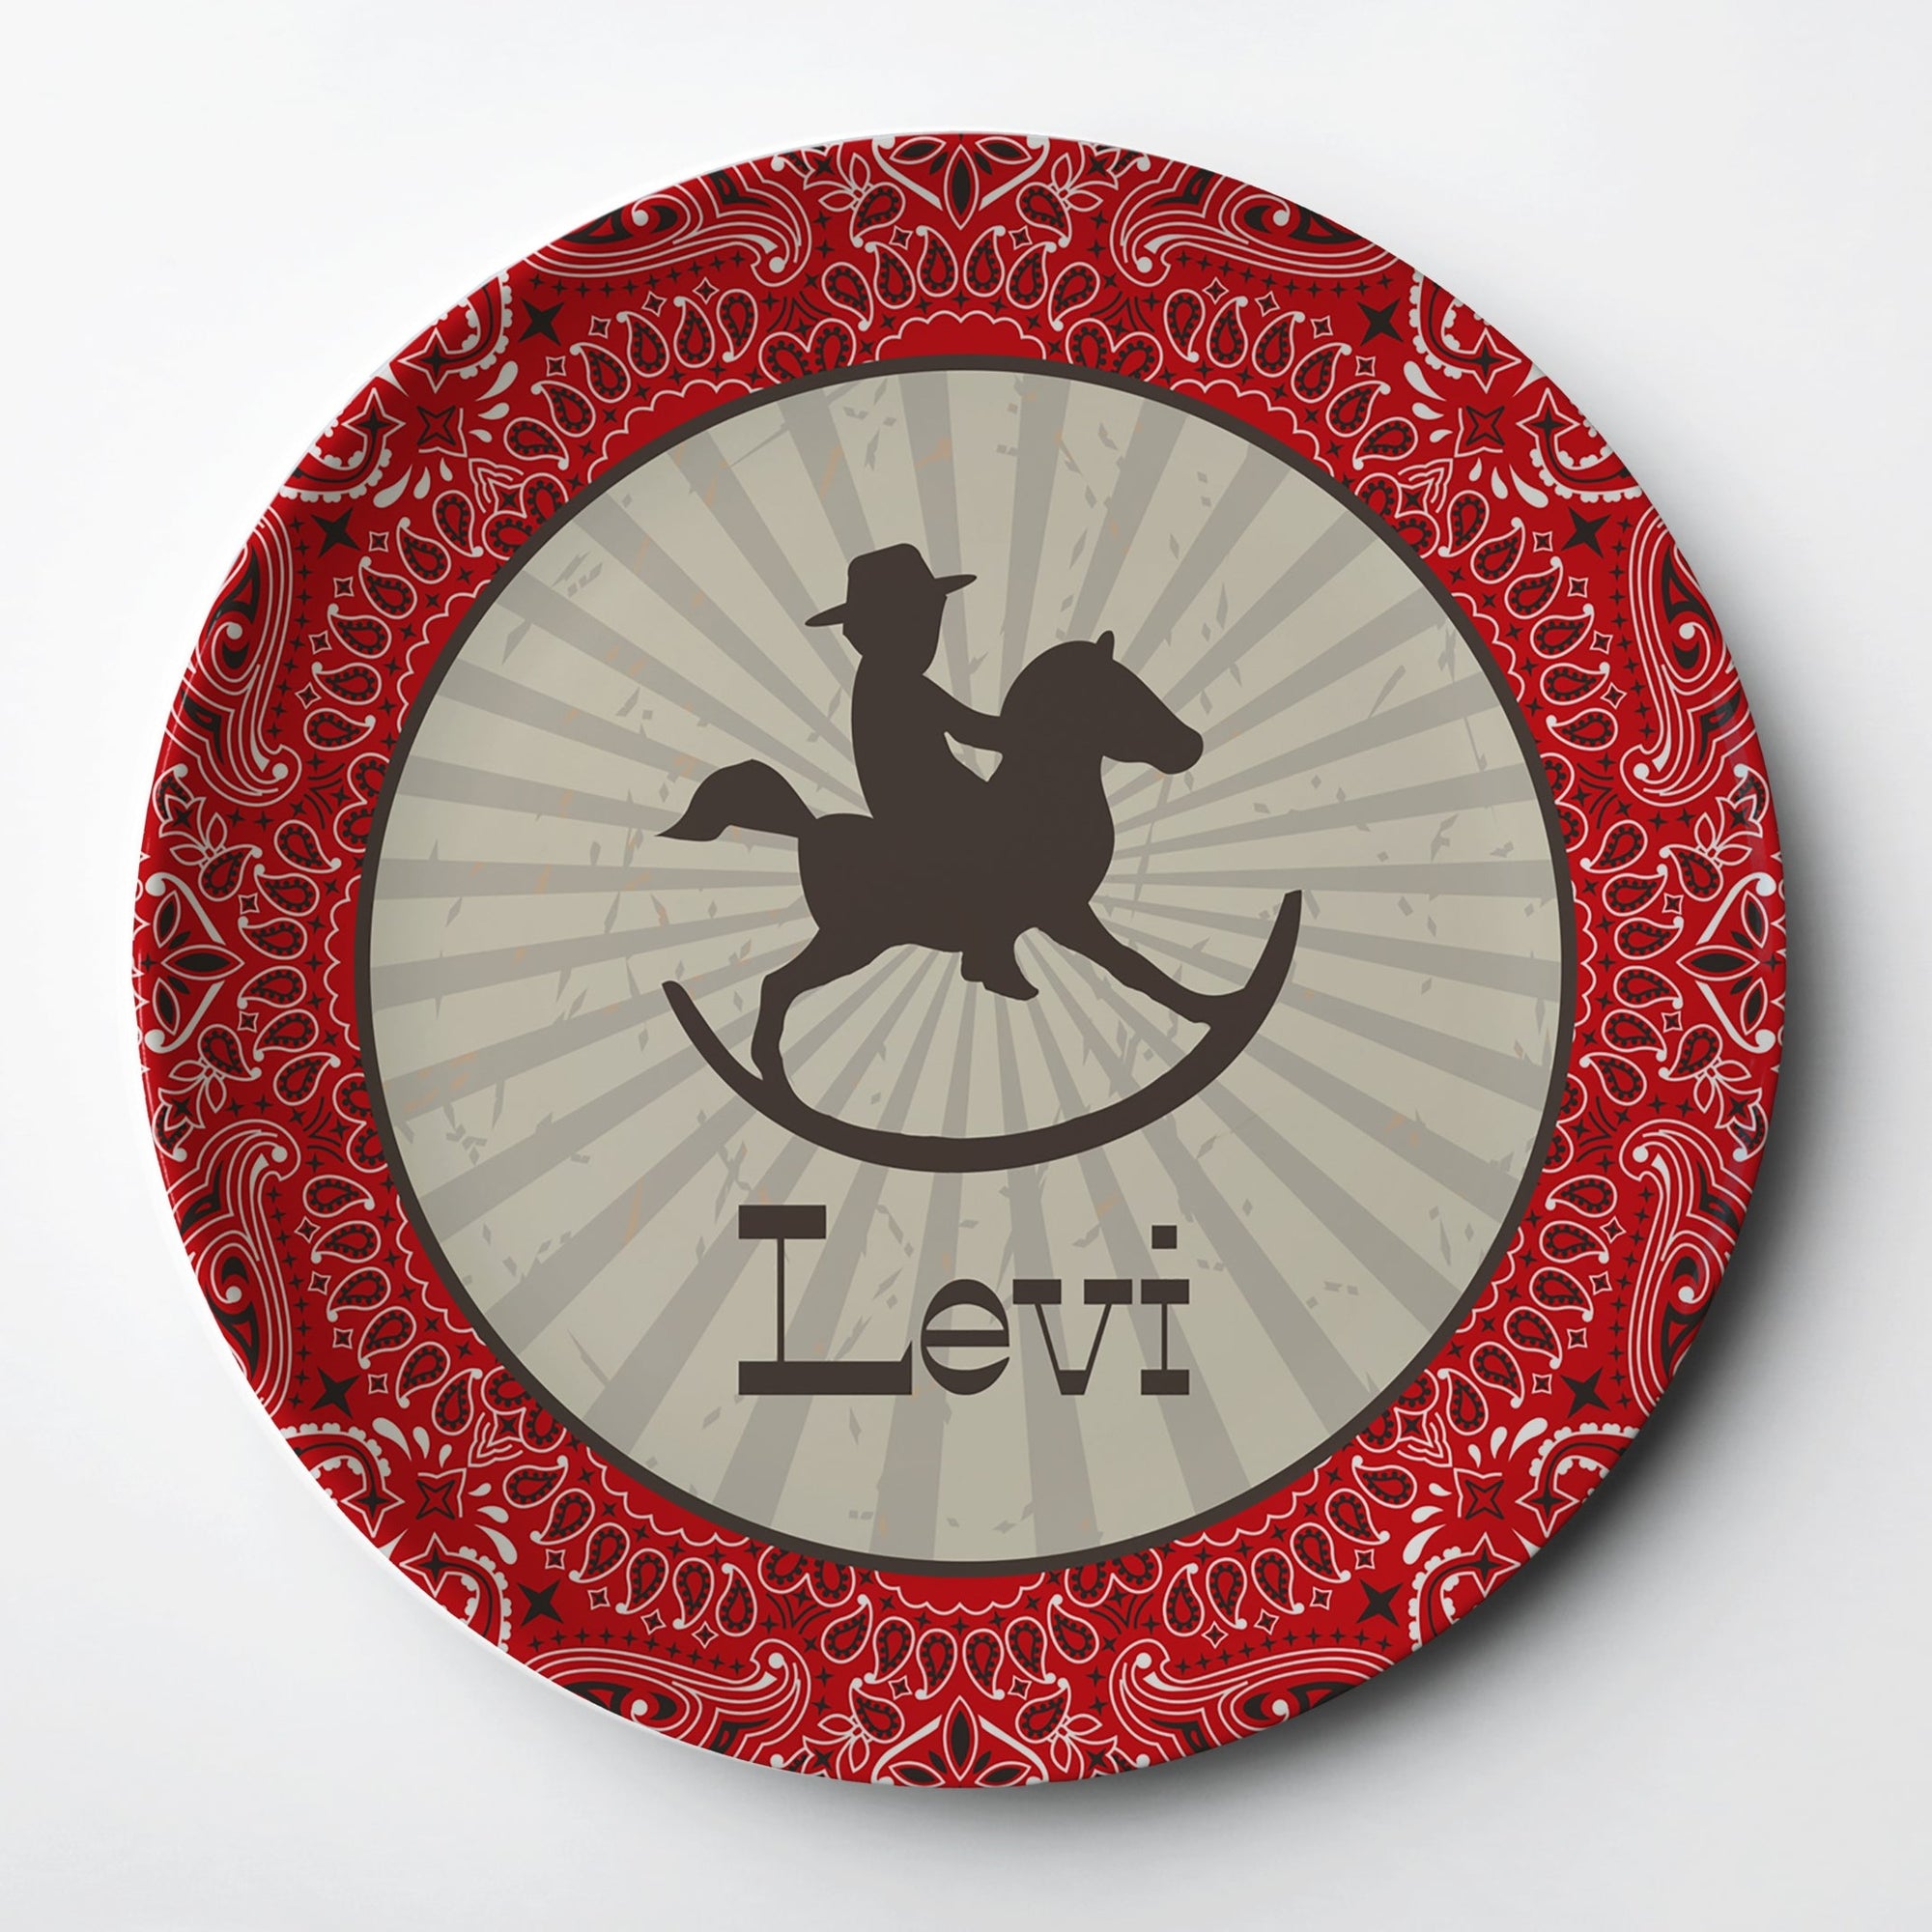 Personalized Plate, Rocking Horse Cowboy with a Western Bandana Pattern